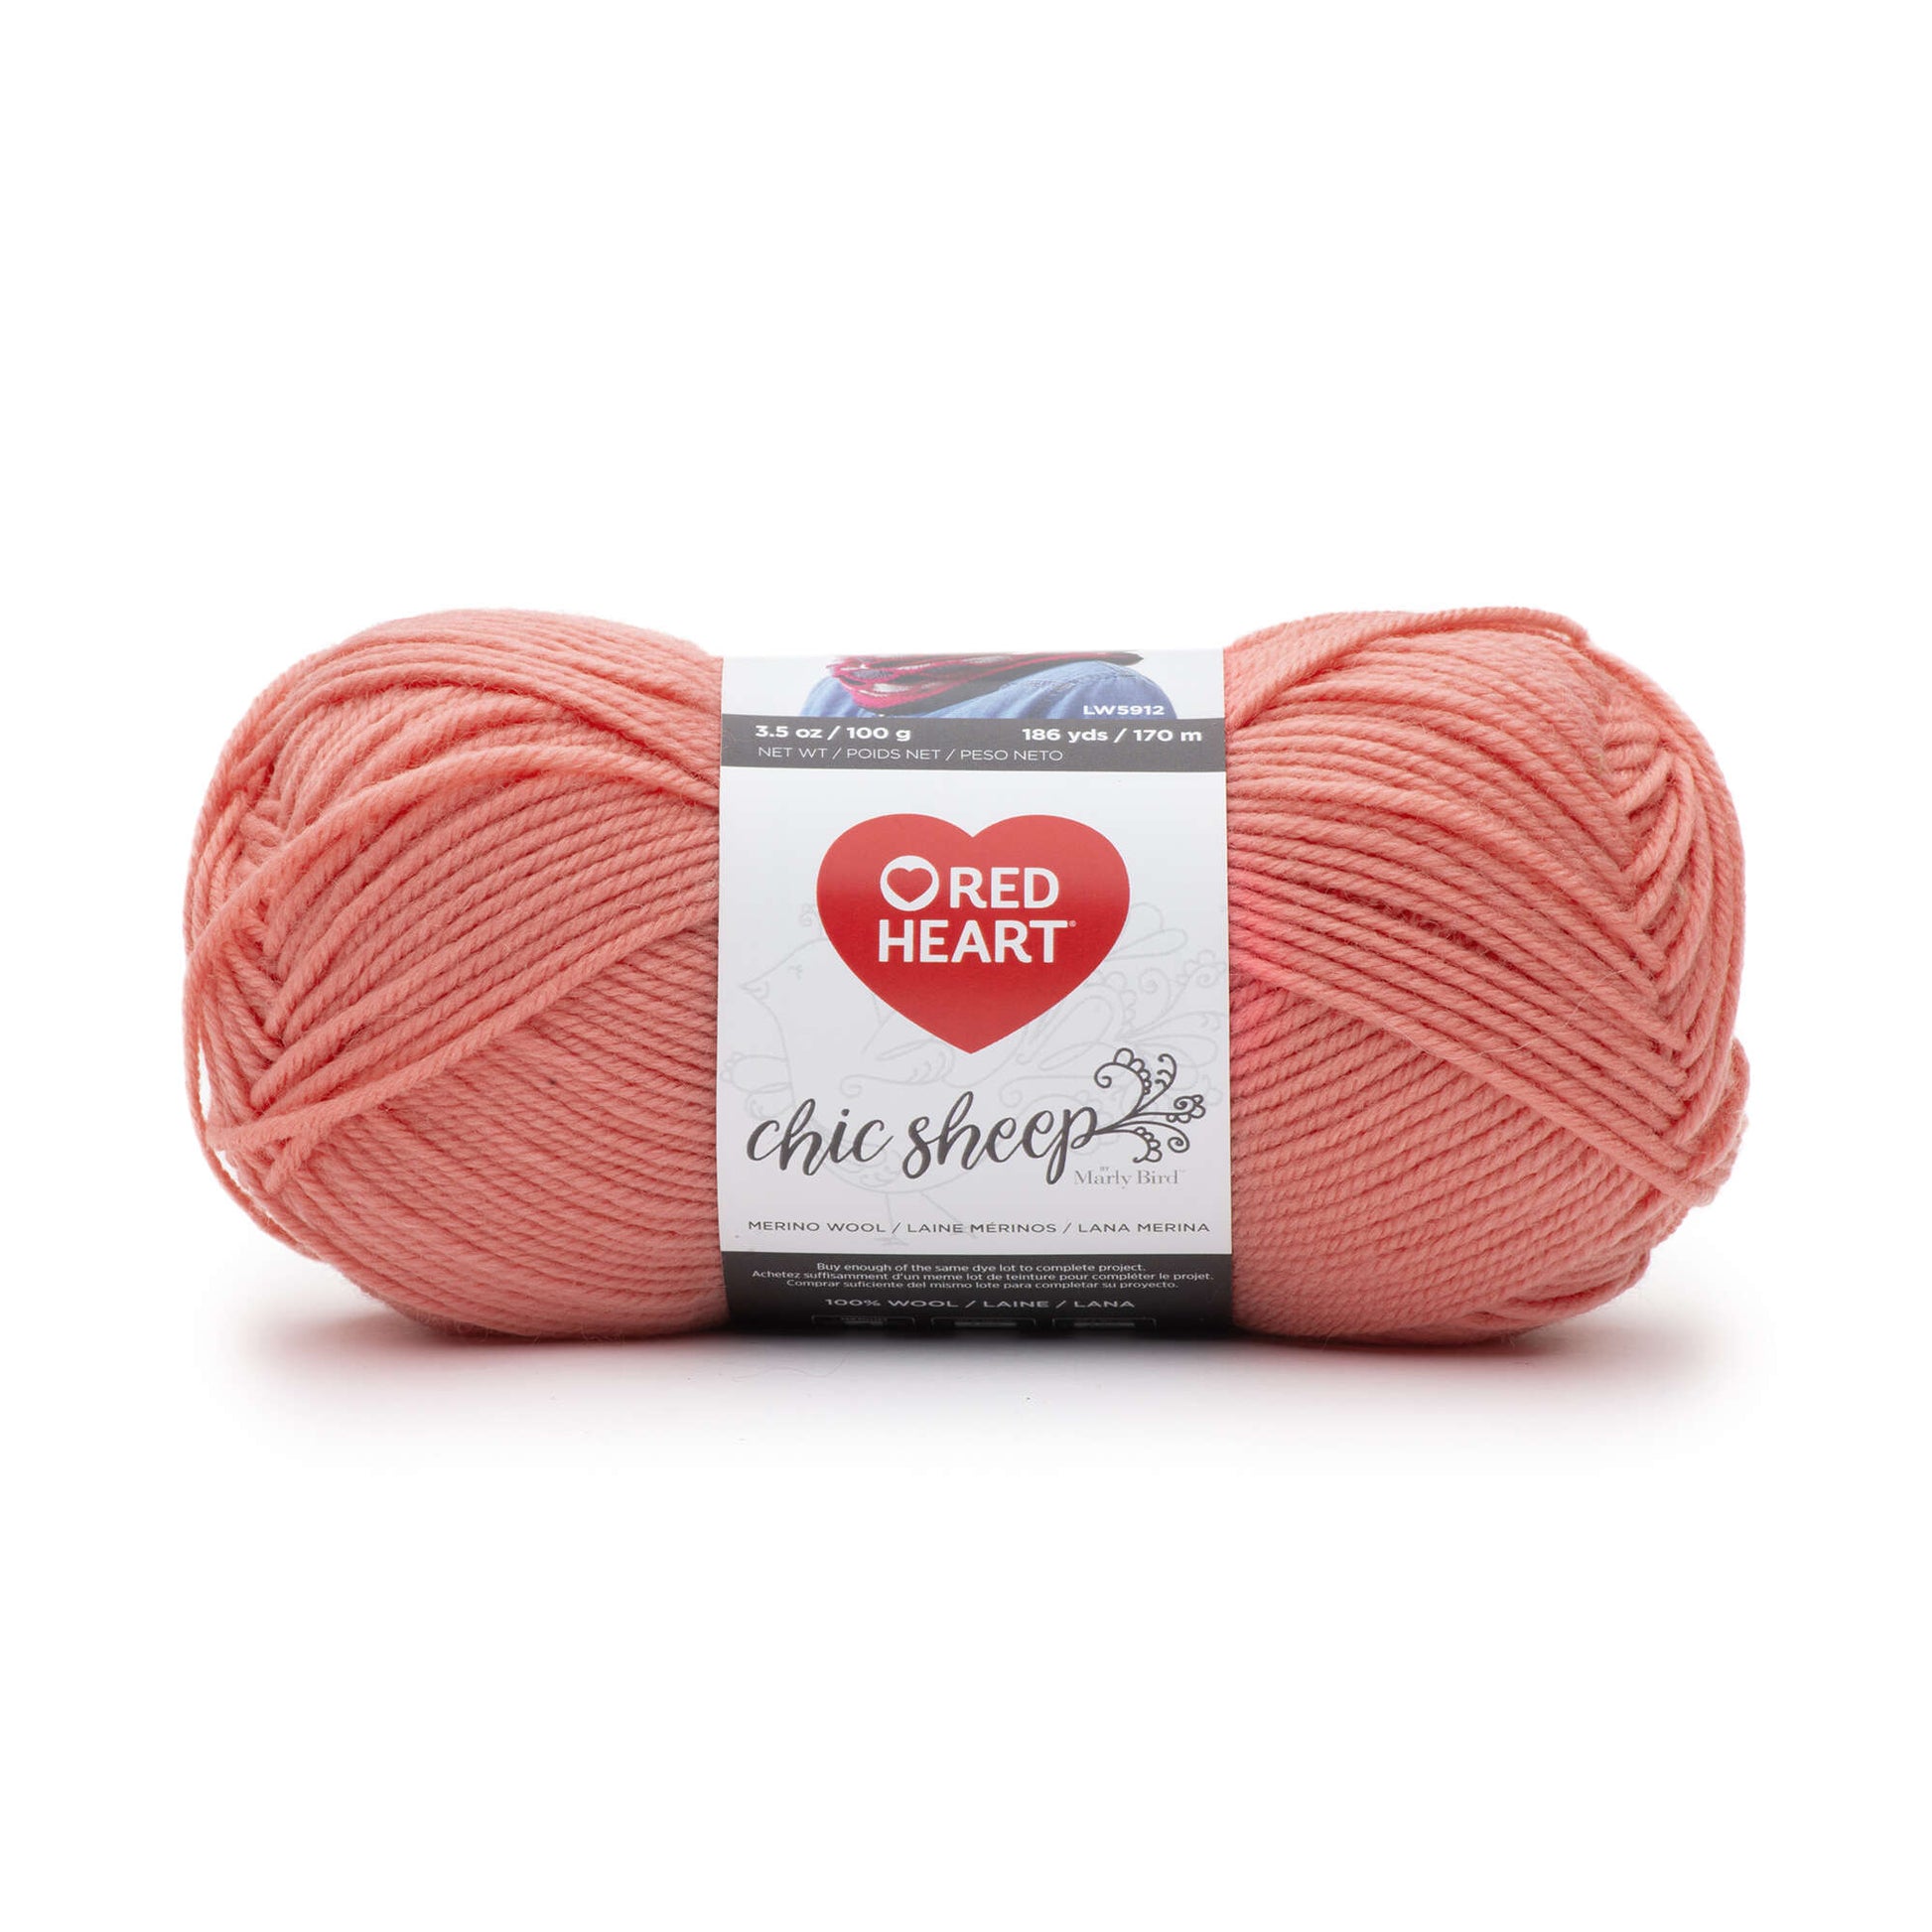 Red Heart Chic Sheep Yarn - Clearance shades